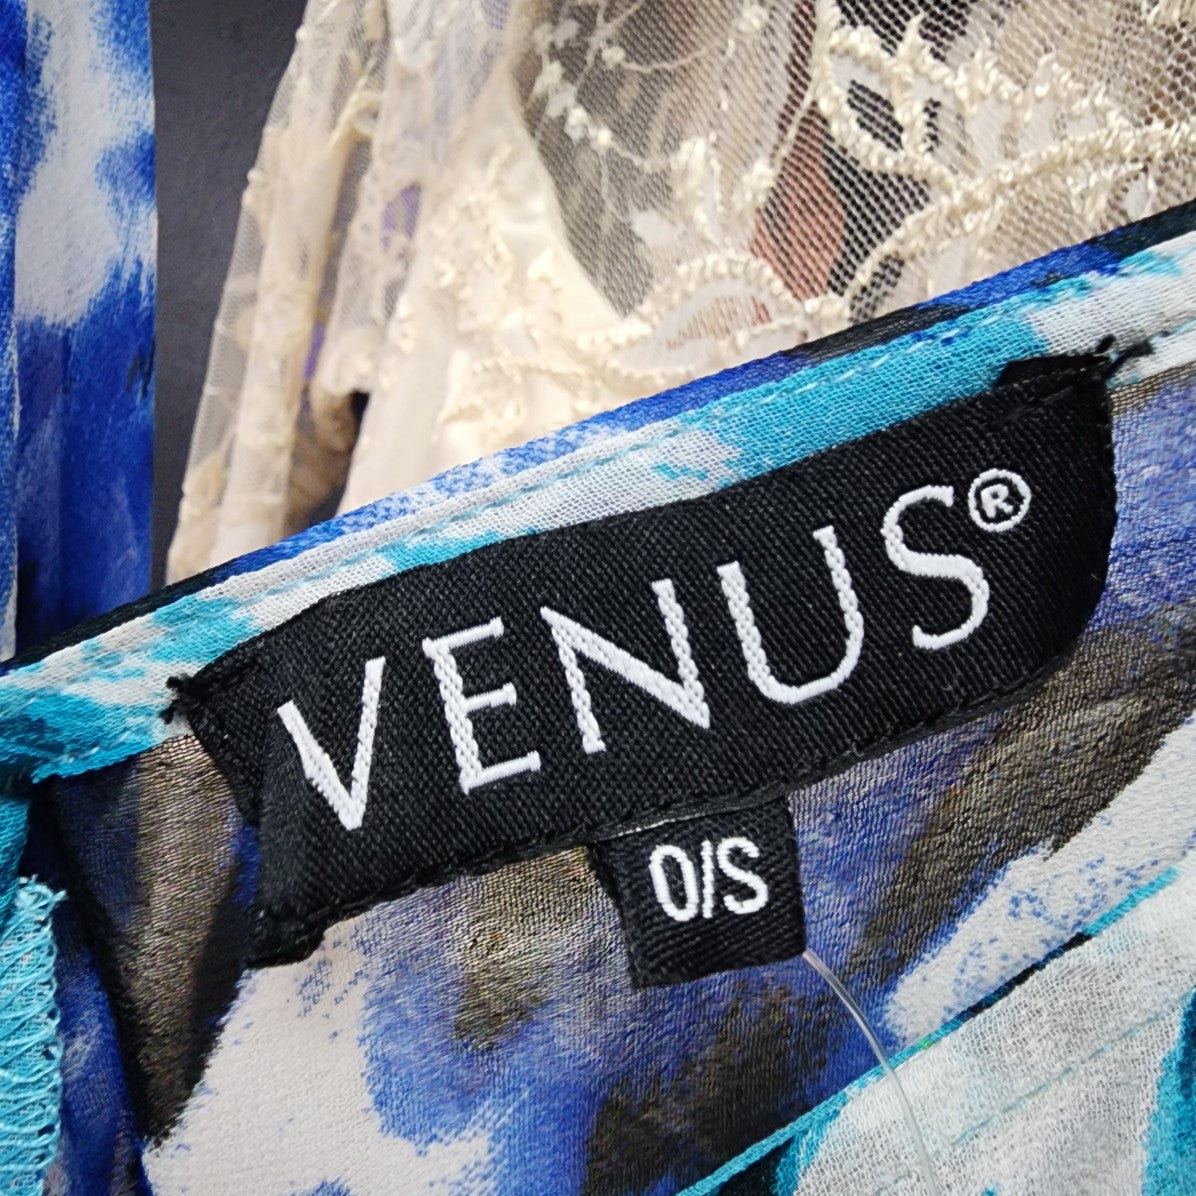 Venus Blue Sheer Dress Beach Cover Up One Size